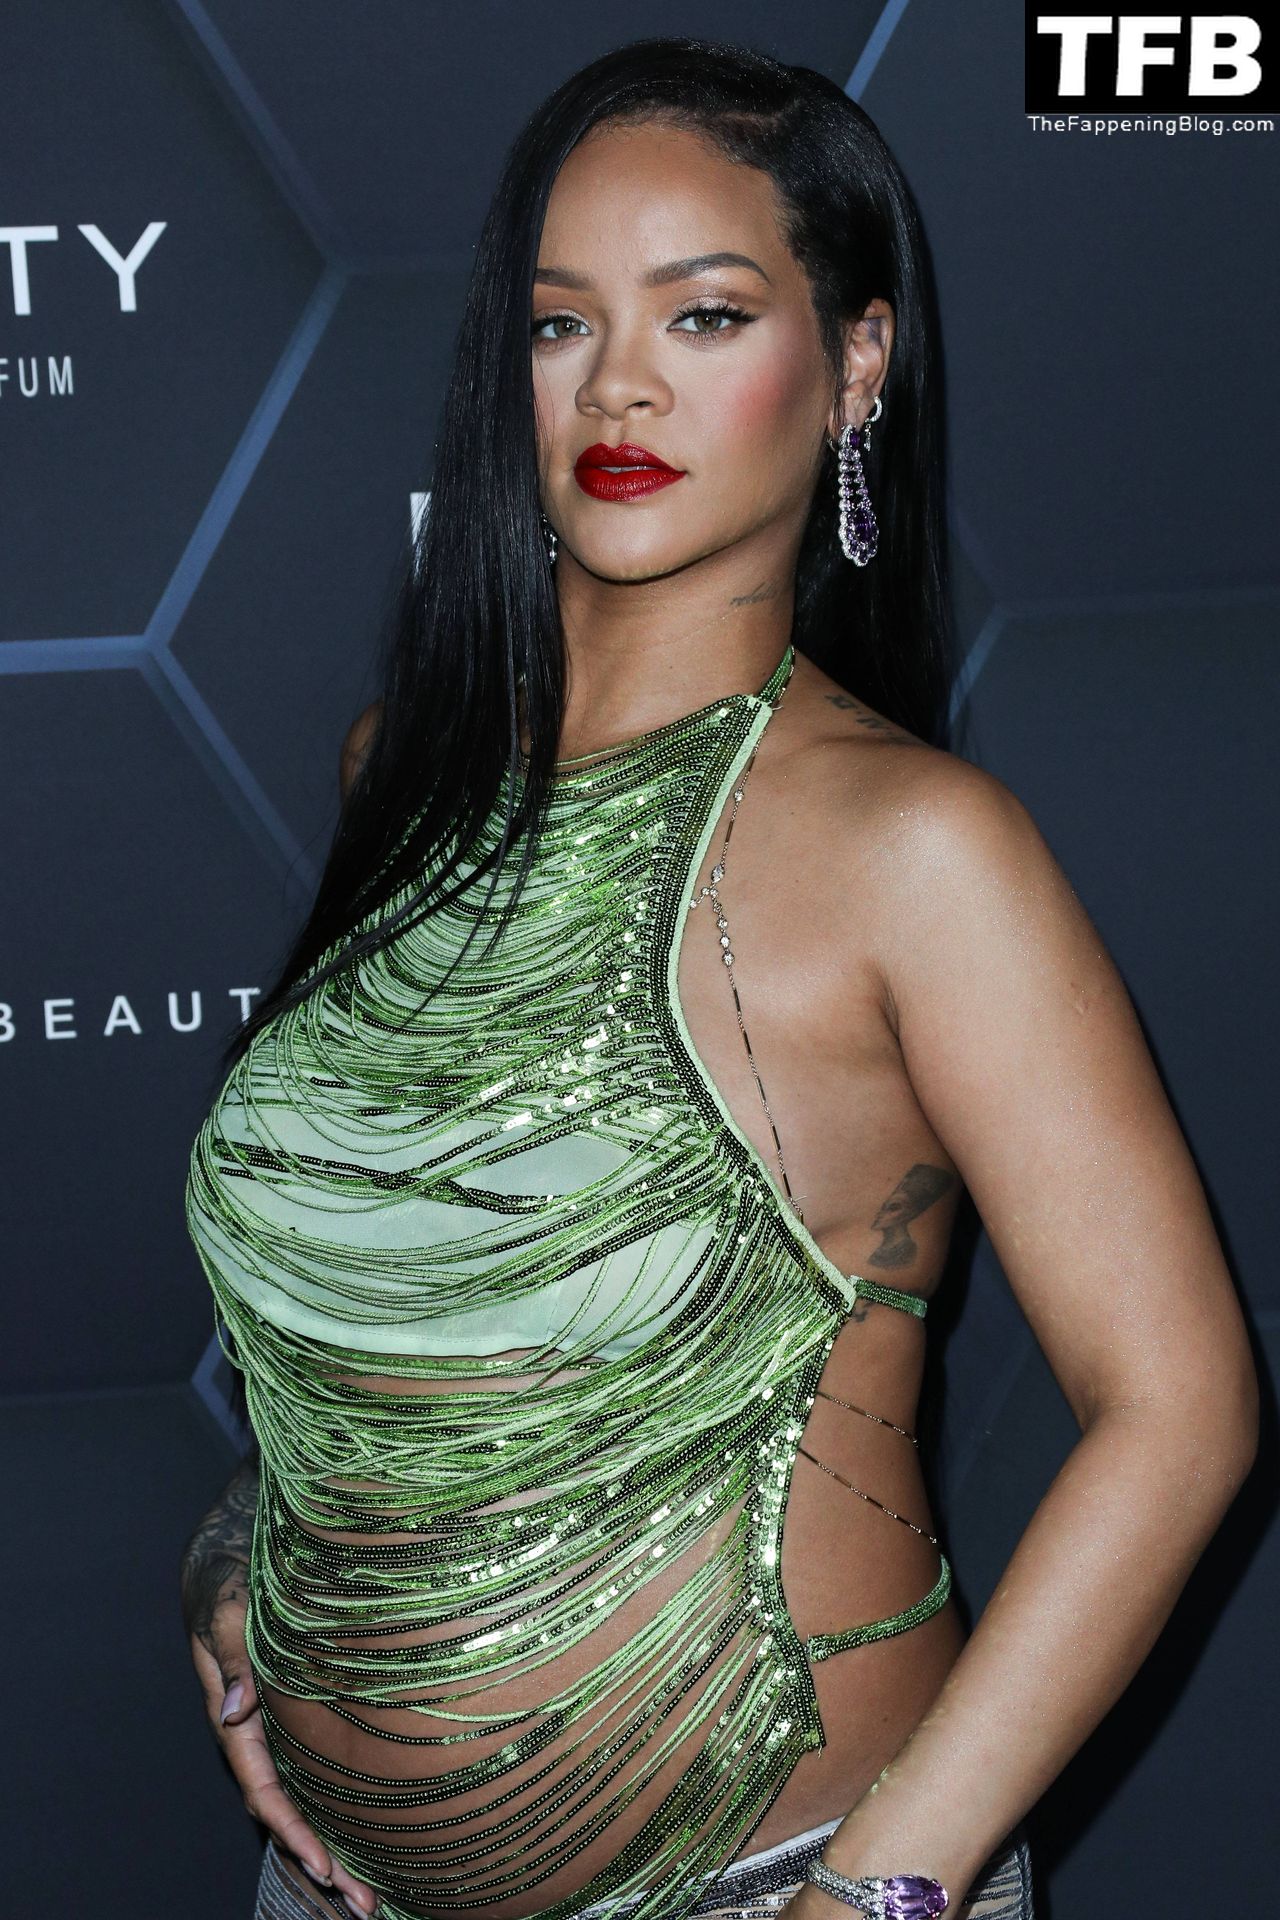 Rihanna-Sexy-The-Fappening-Blog-148.jpg